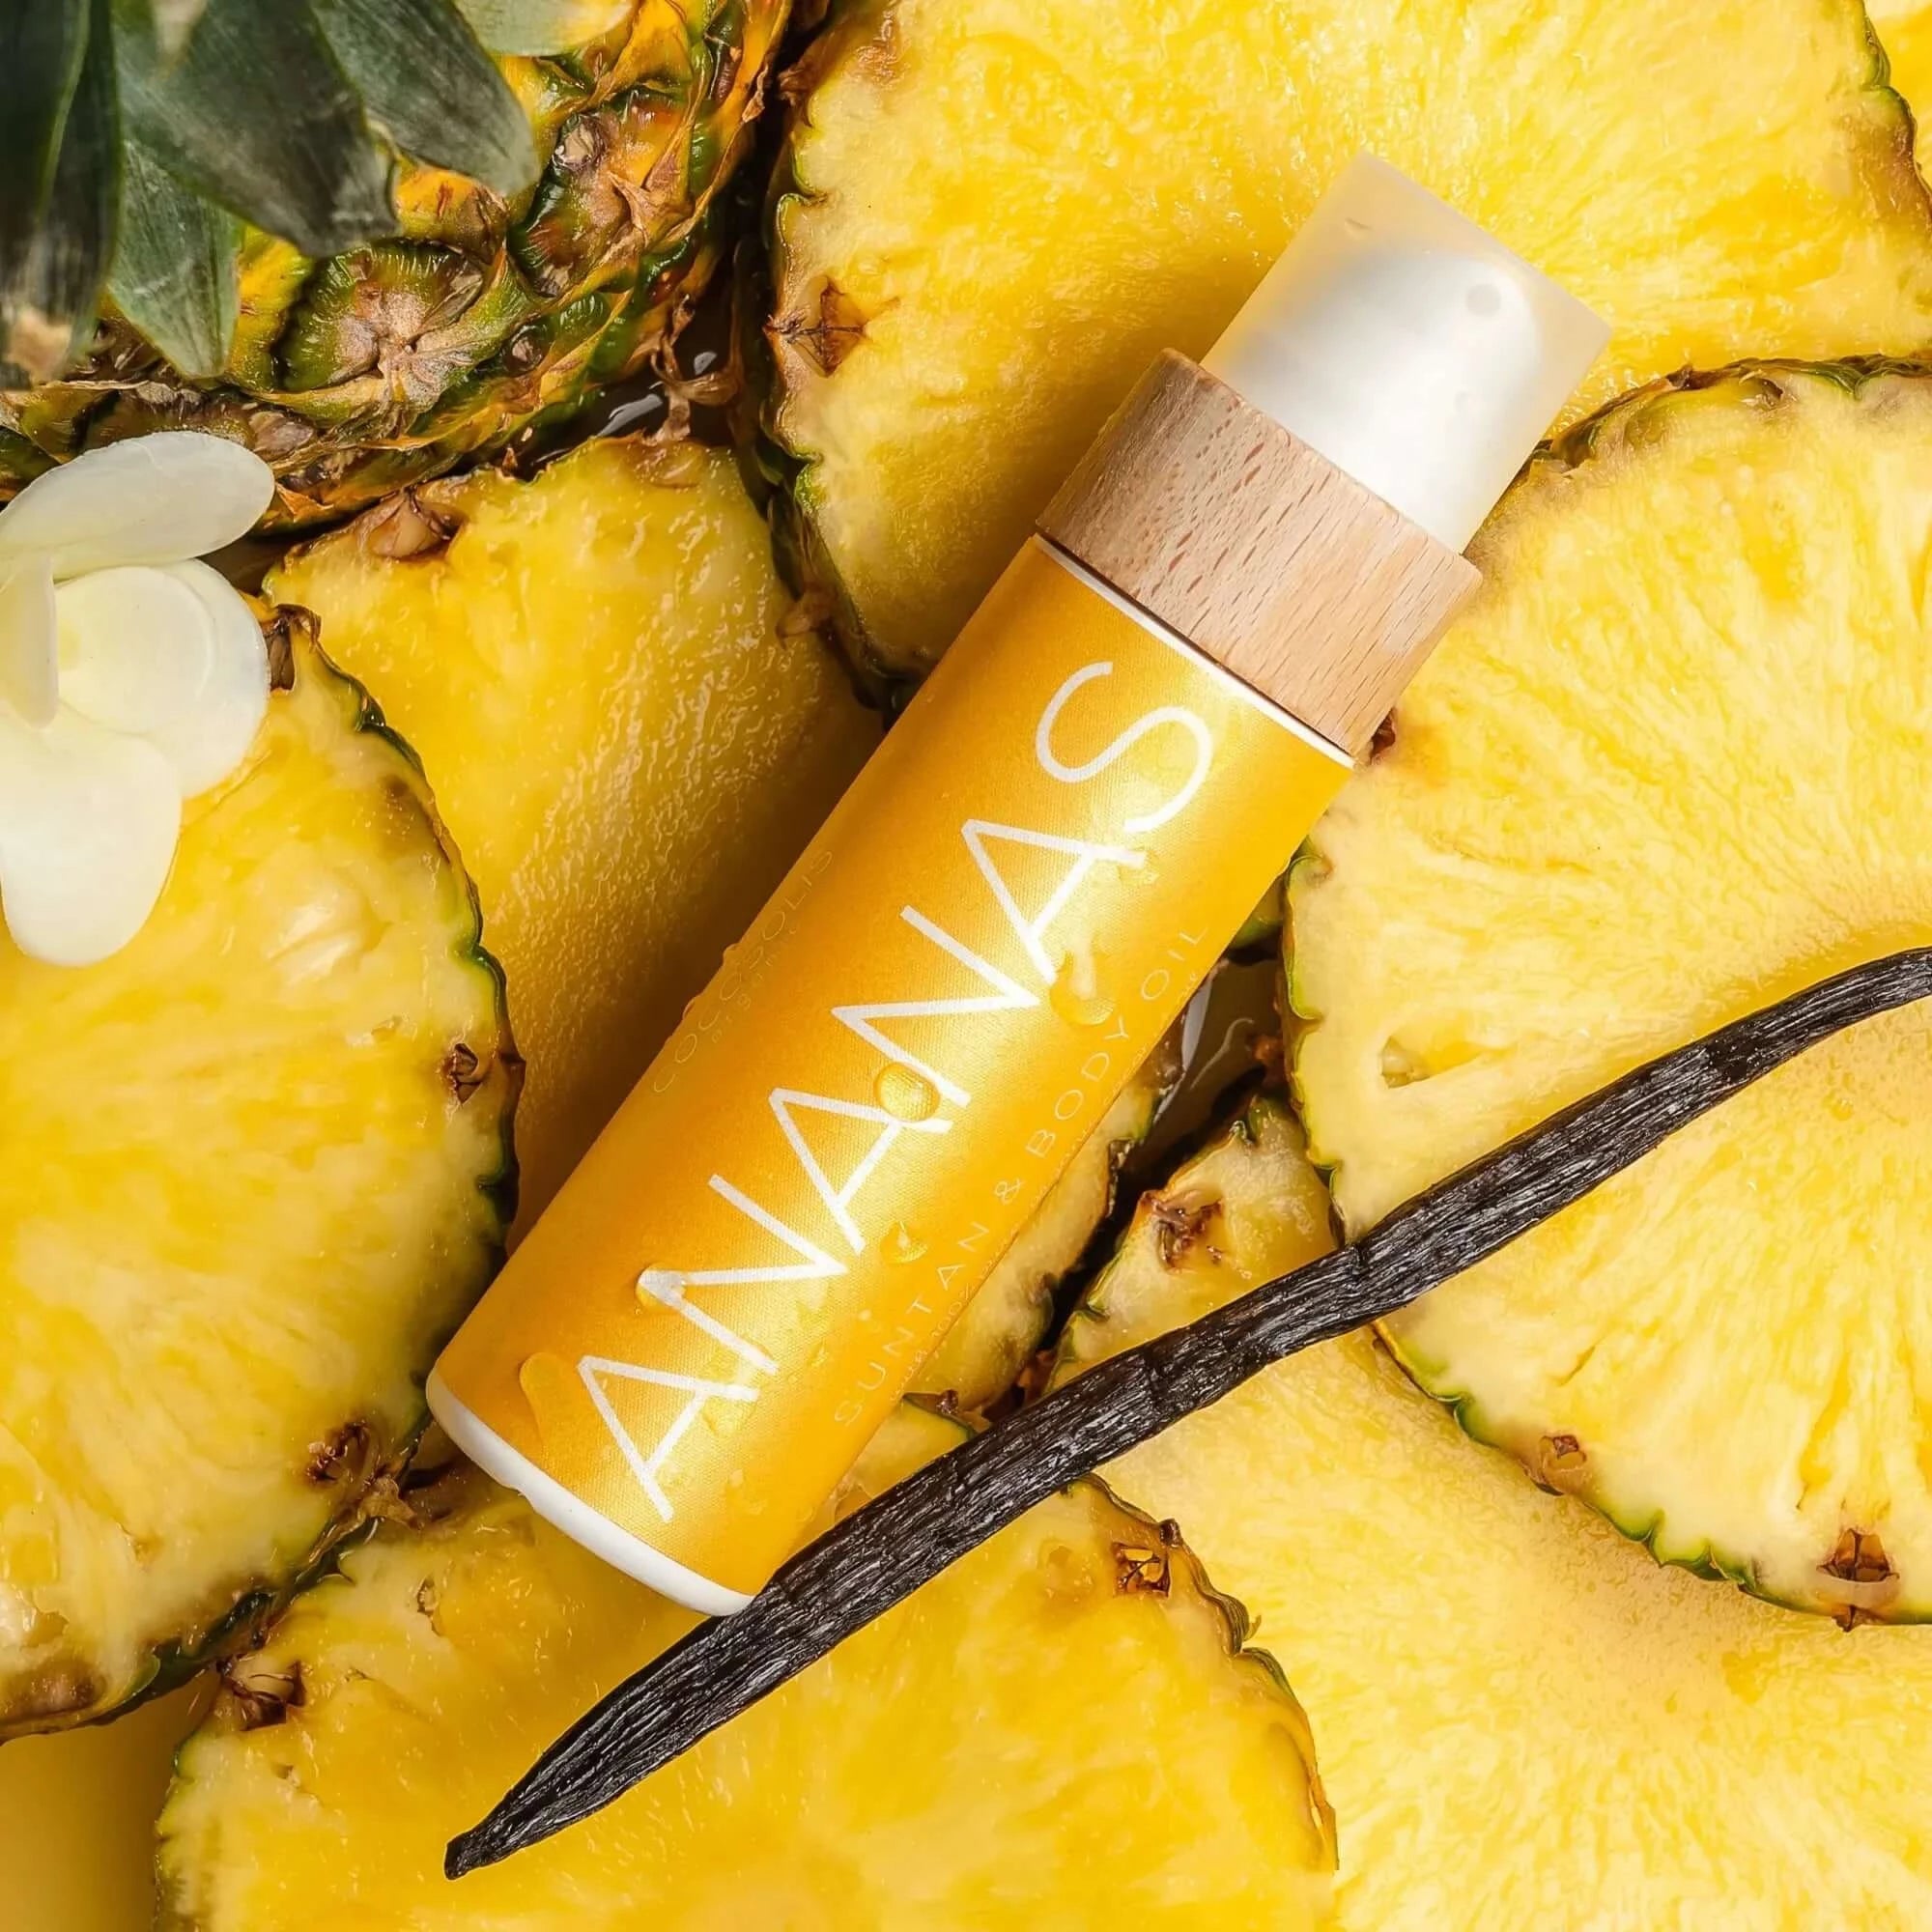 Ananas Sun Tan & Body Oil 110ml Cocosolis